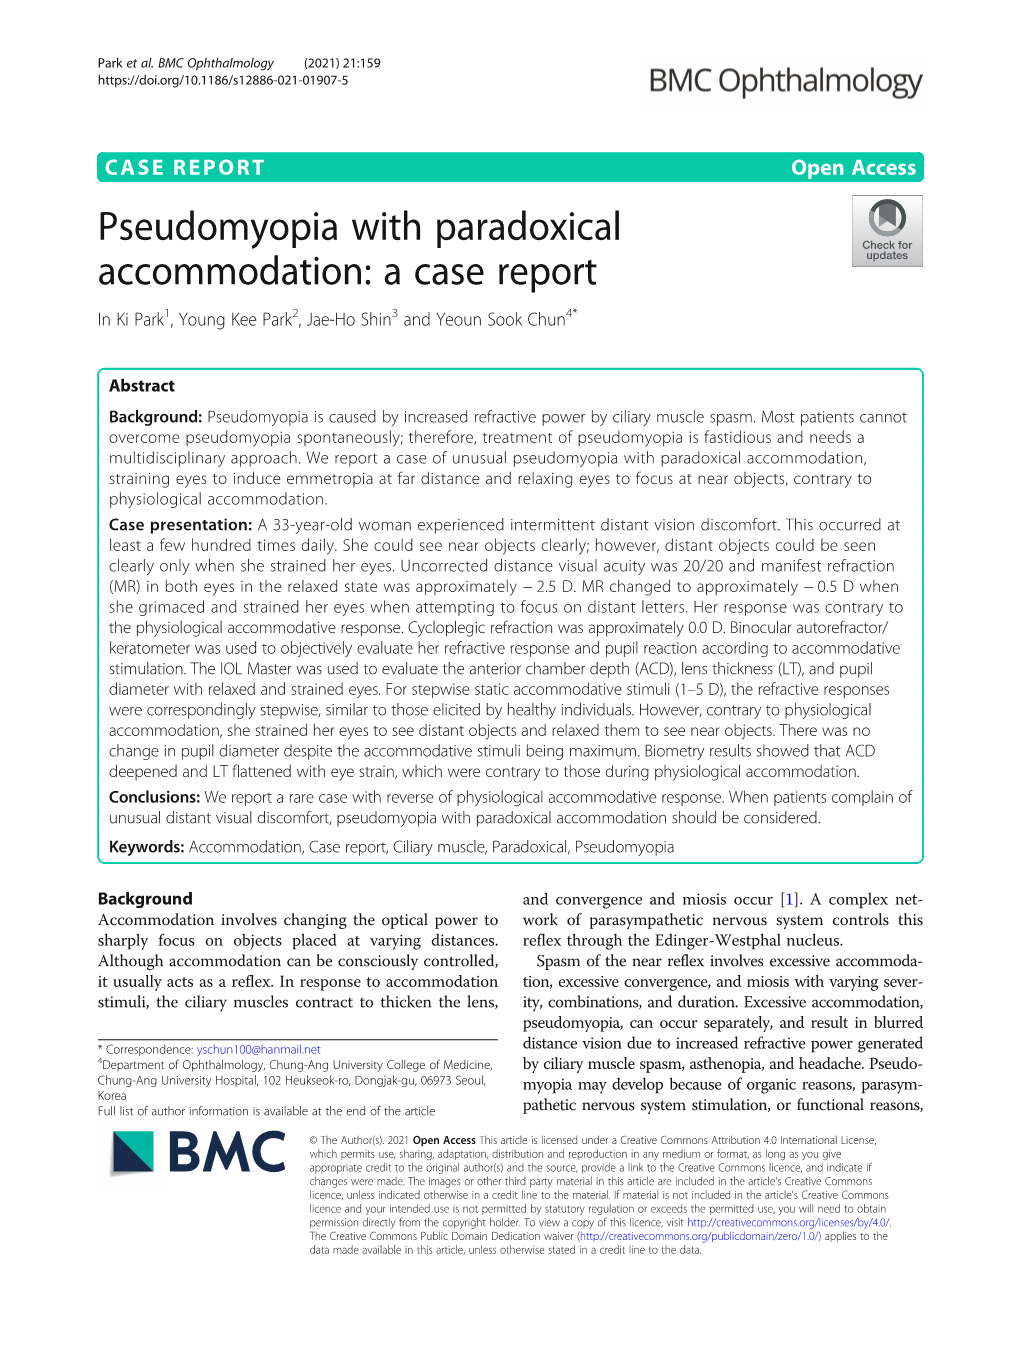 Pseudomyopia with Paradoxical Accommodation: a Case Report in Ki Park1, Young Kee Park2, Jae-Ho Shin3 and Yeoun Sook Chun4*